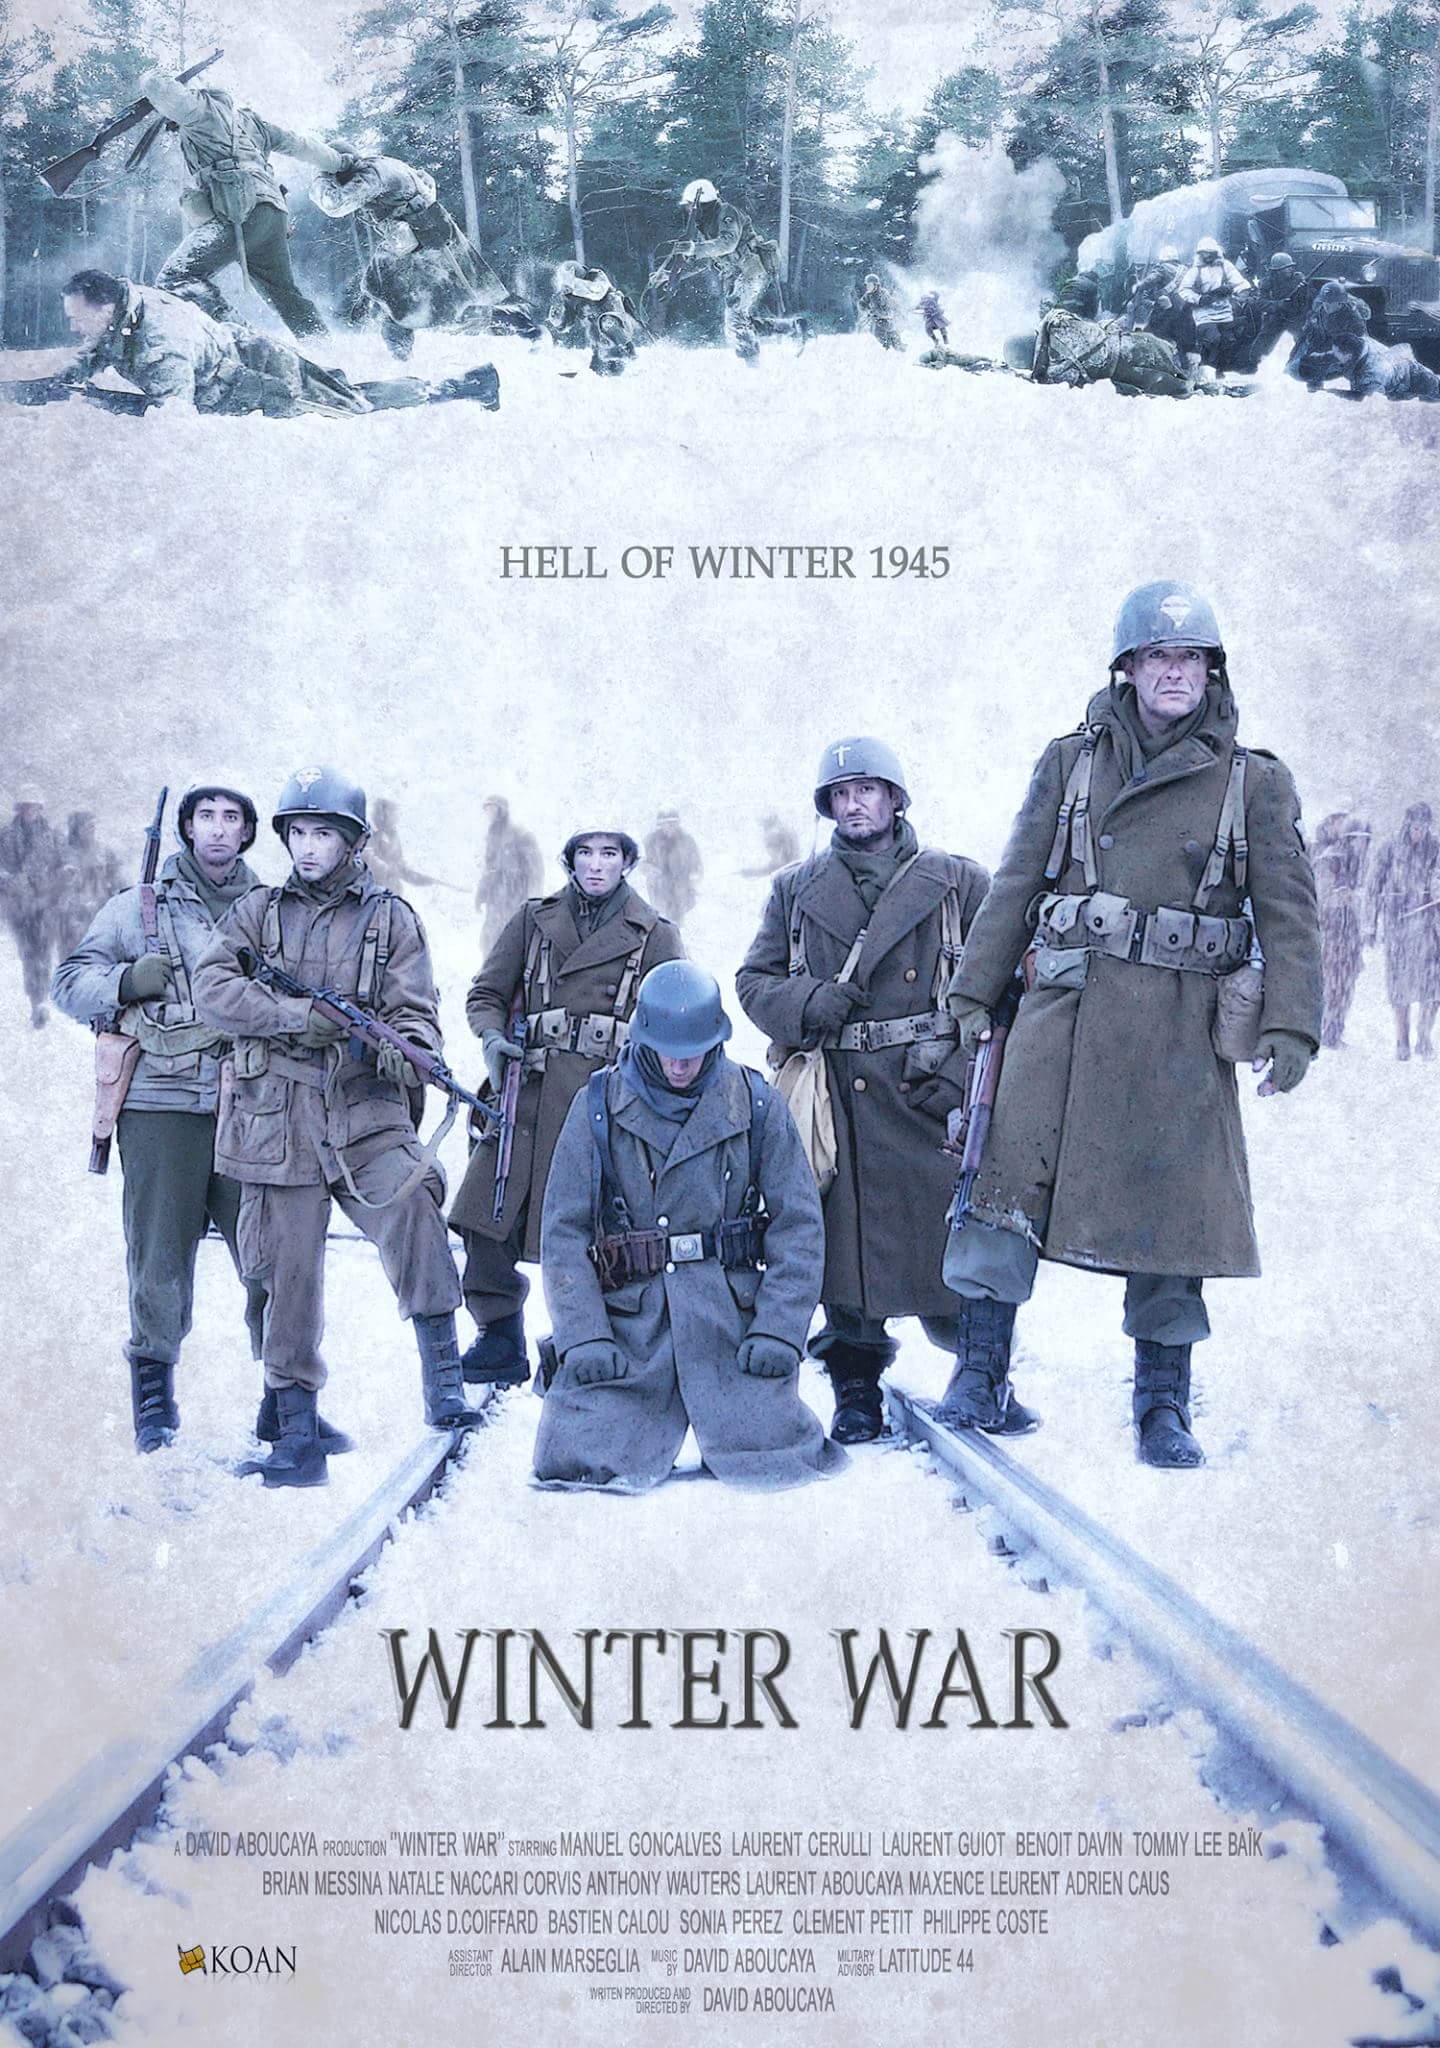 Nonton film Winter War layarkaca21 indoxx1 ganool online streaming terbaru